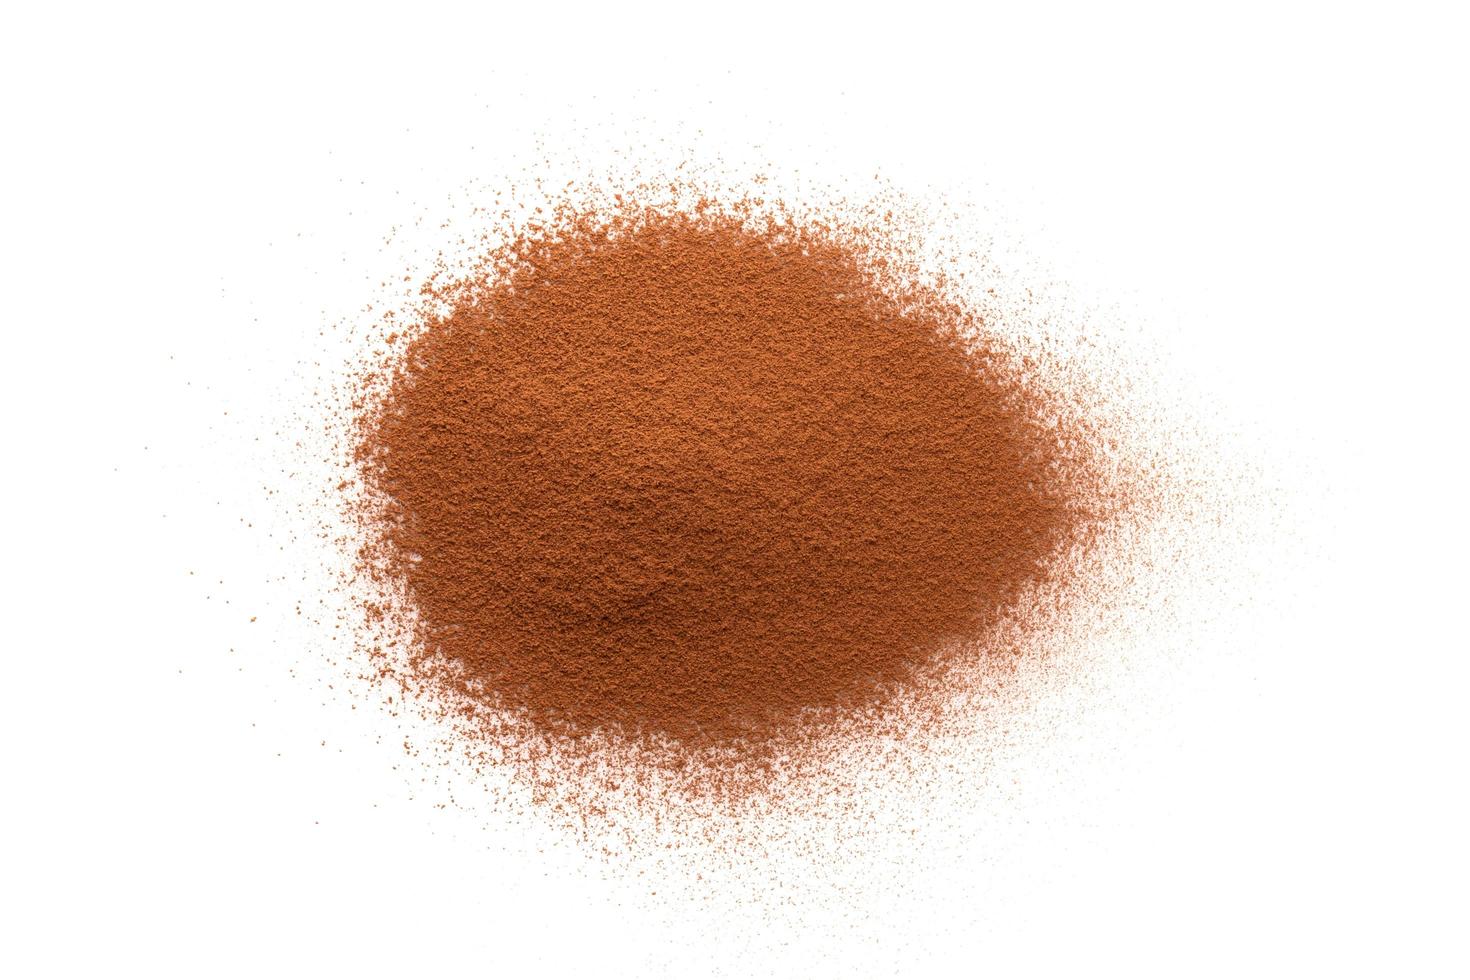 Montón de cacao en polvo o chocolate en polvo aislado en blanco foto